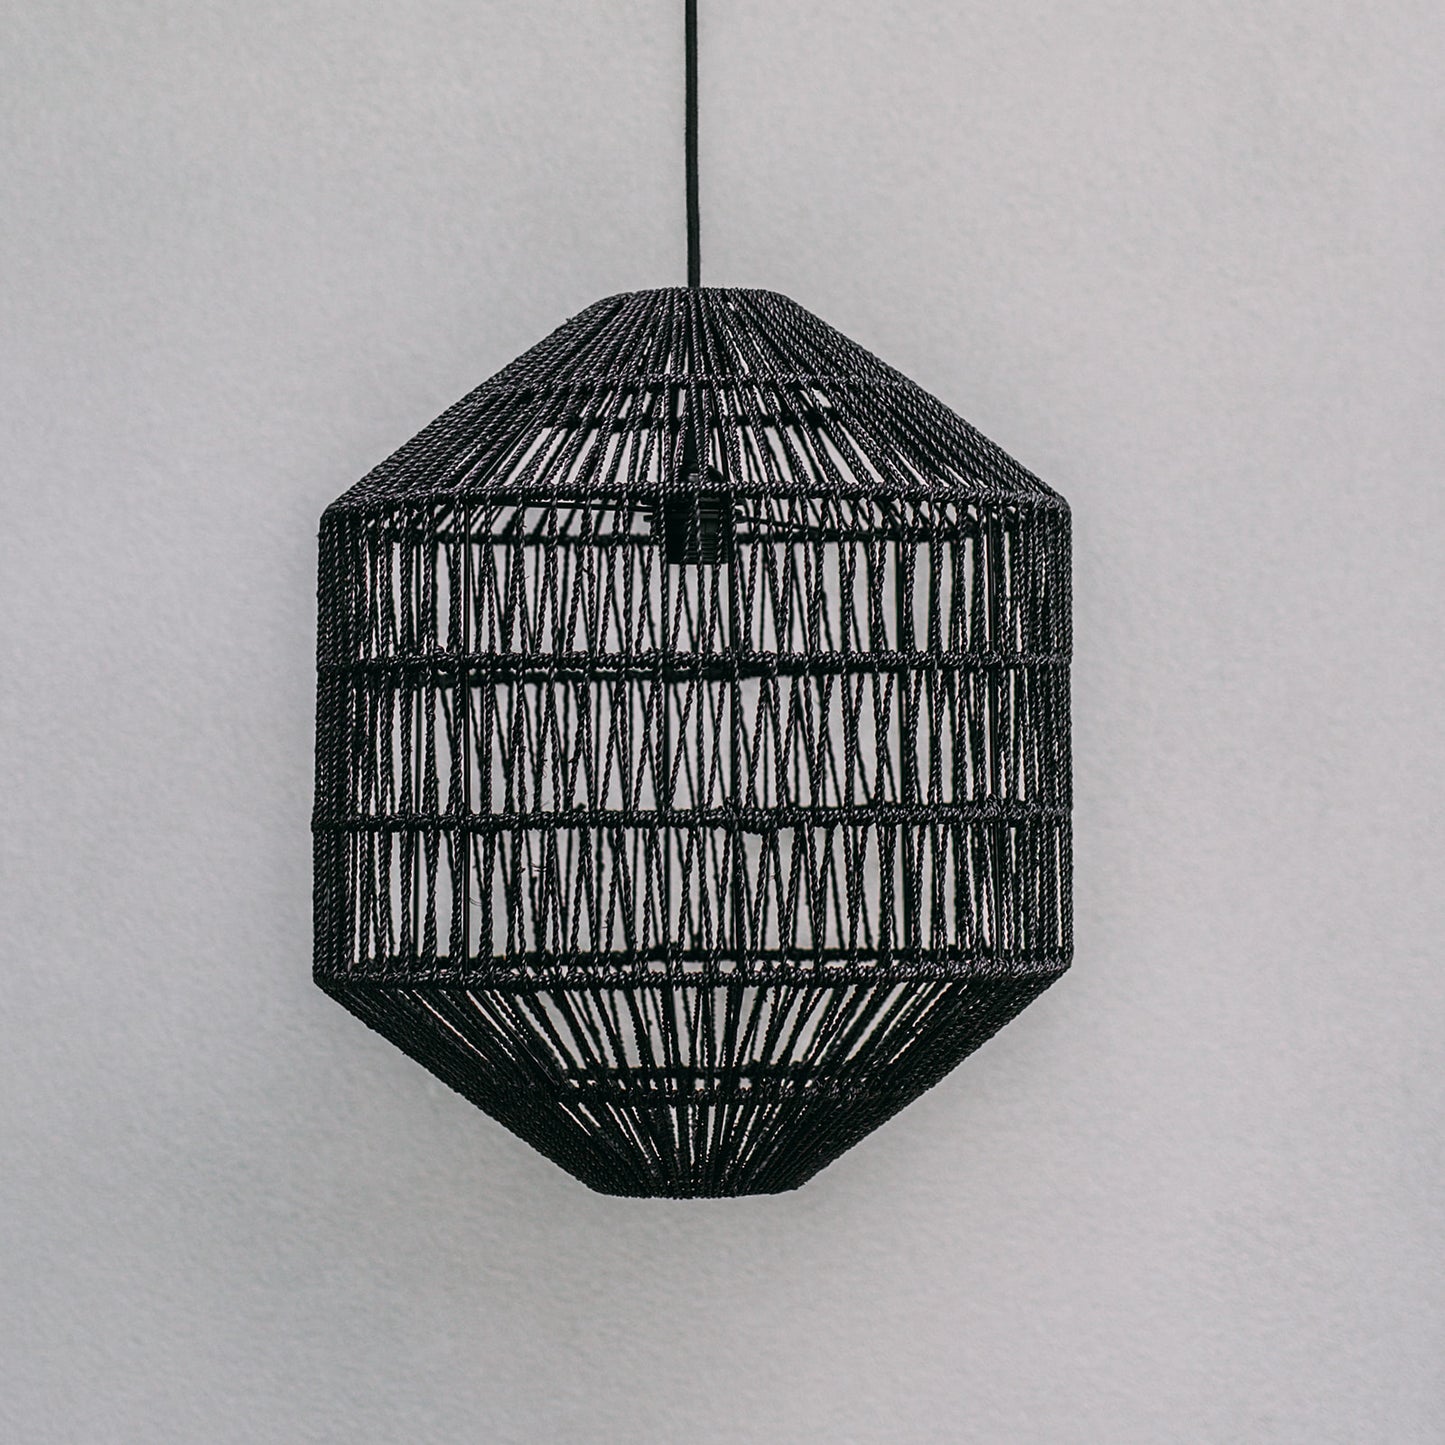 Black seagrass pendant light shade.Seagrass pendant light shade. Ambient light for boho & modern interiors. 